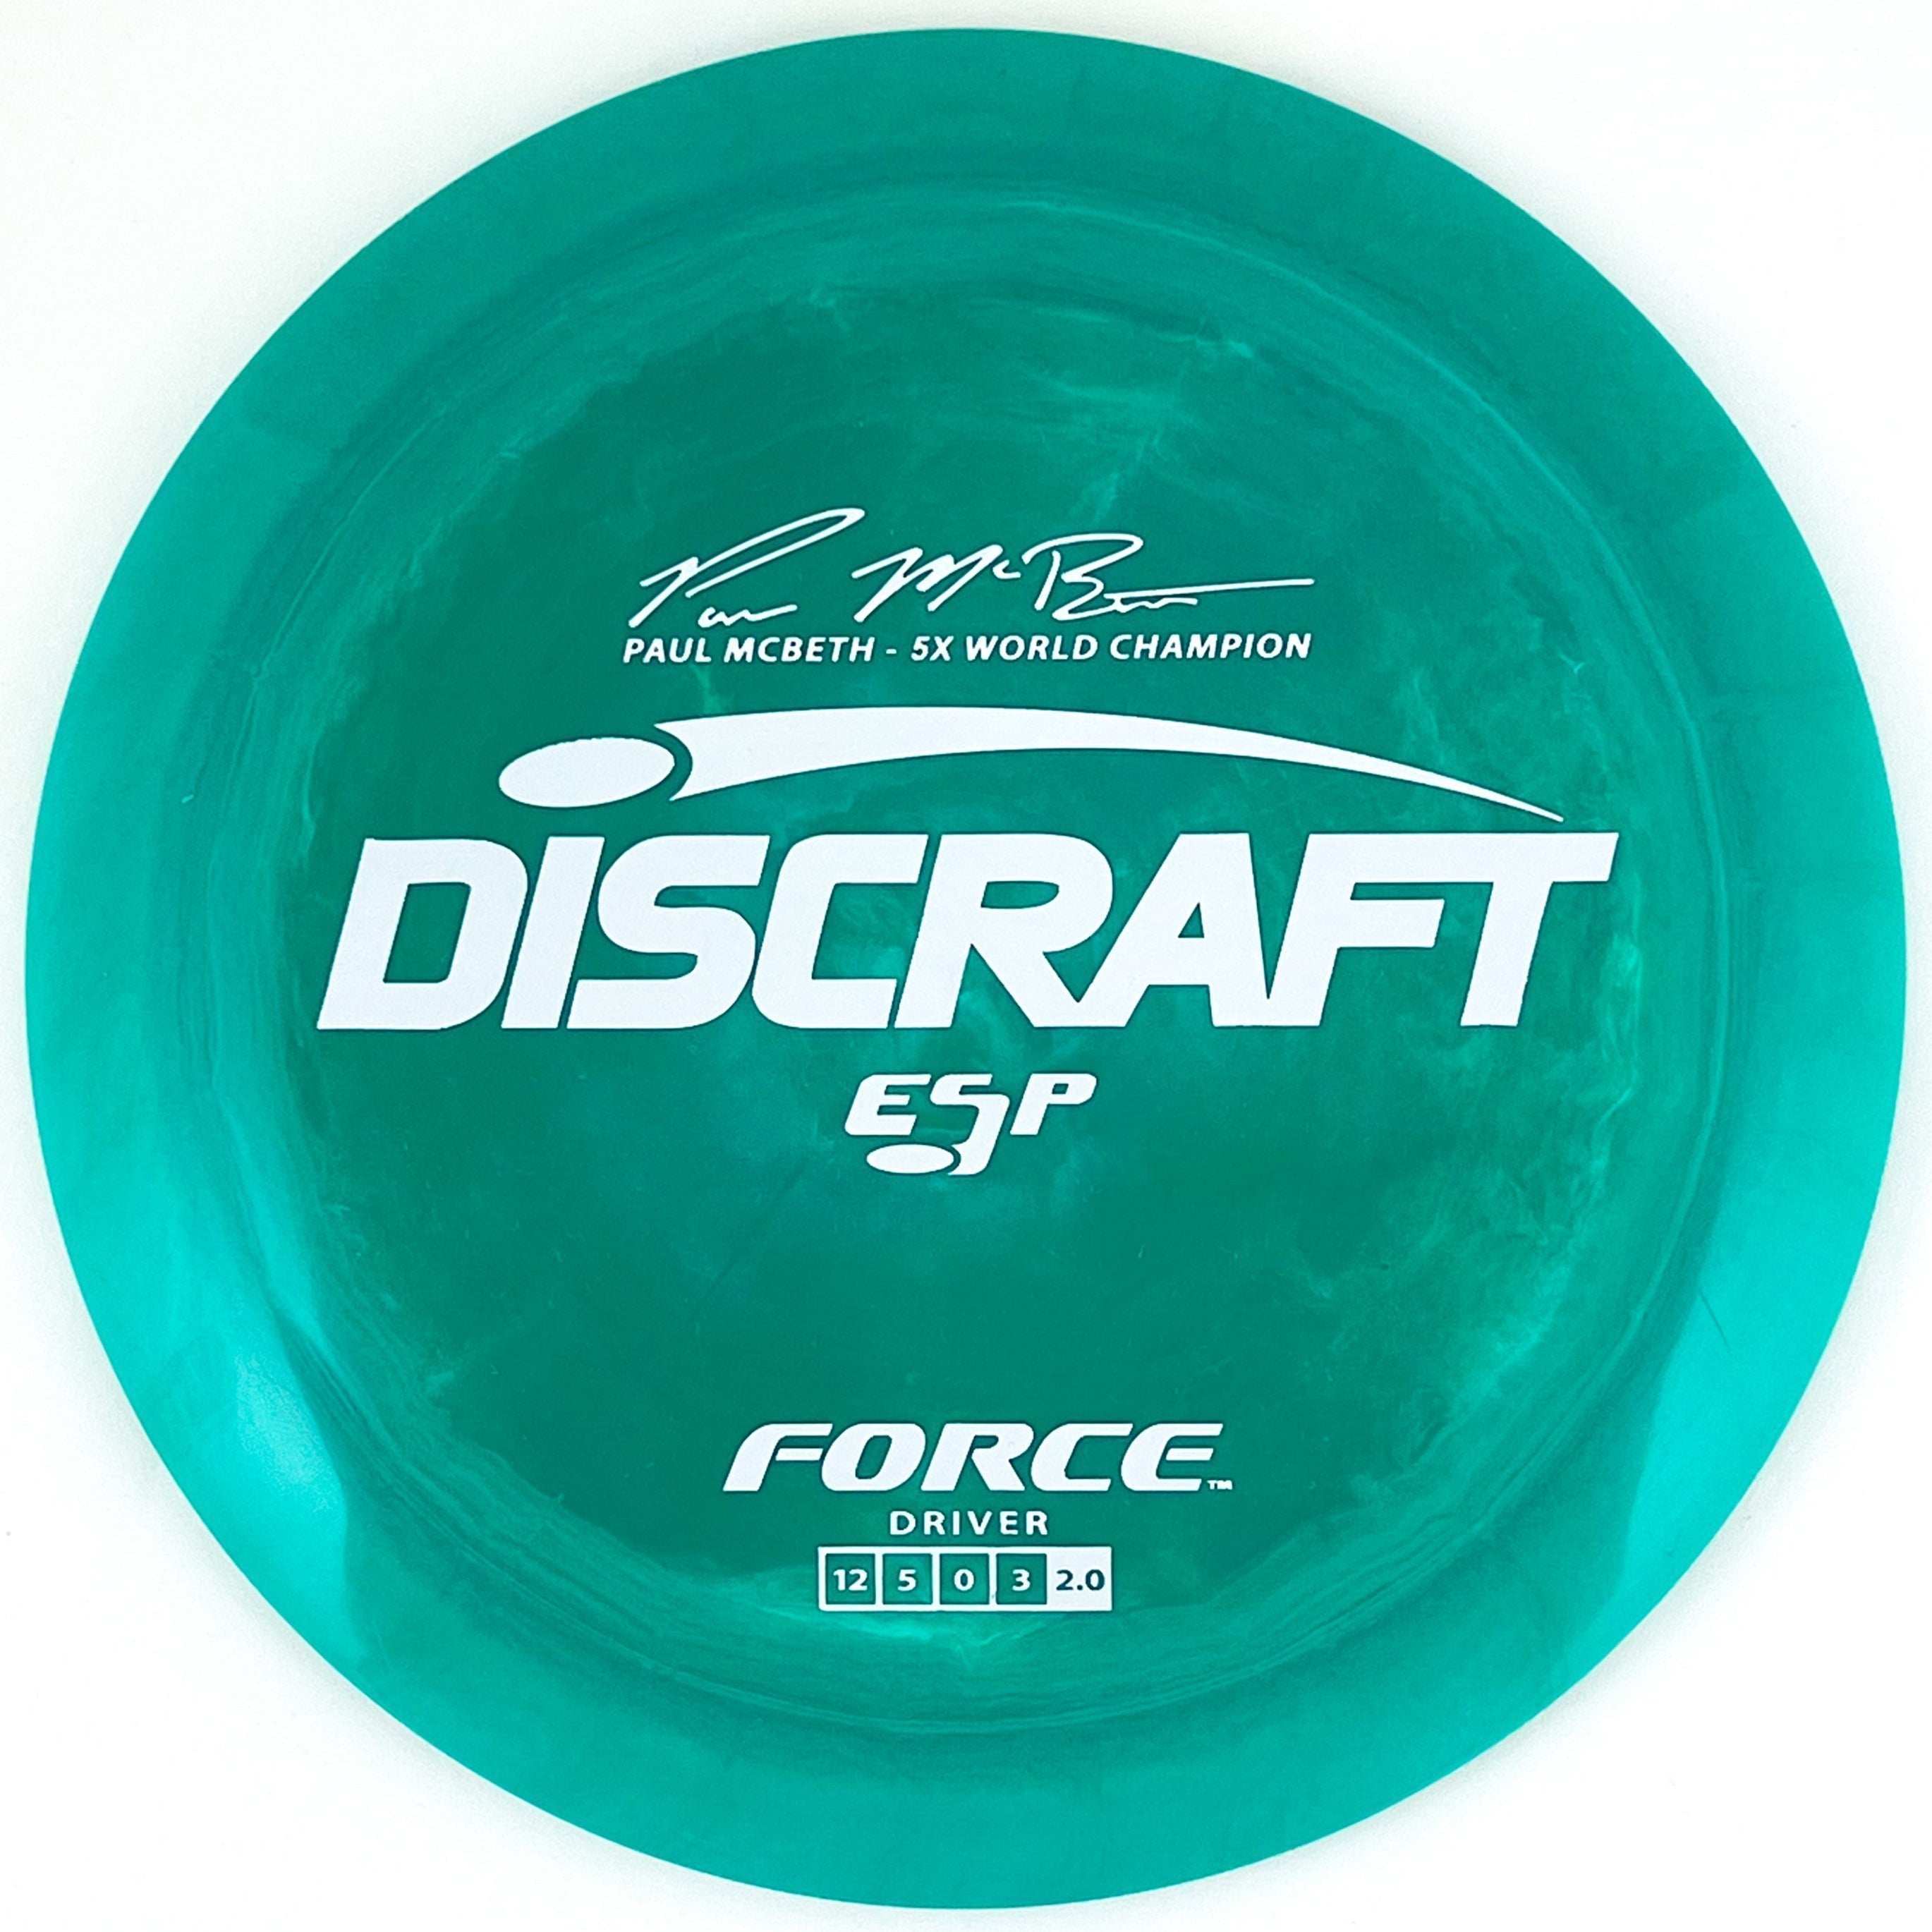 Green 5x Paul McBeth ESP Force disc golf distance driver by Discraft Disc Golf.